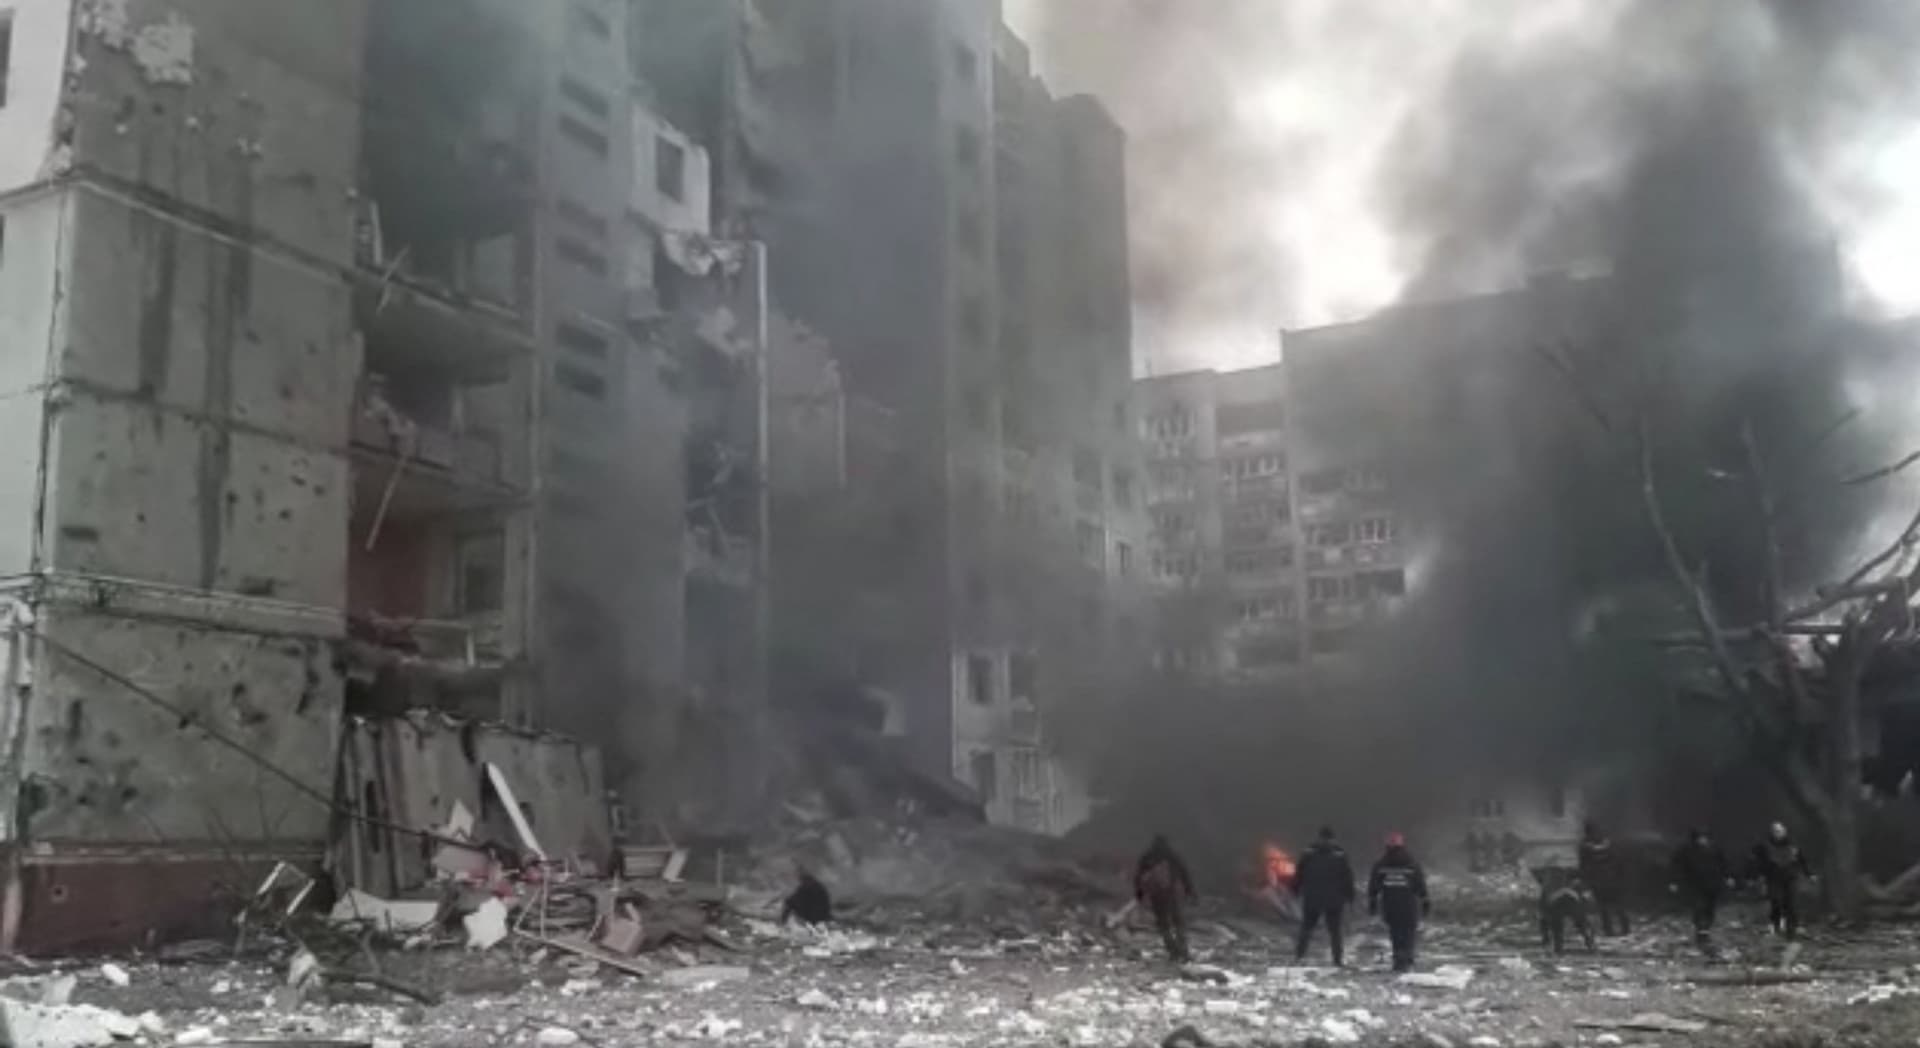 Chernihiv has come under heavy bombardment since Russia launched its invasion of Ukraine